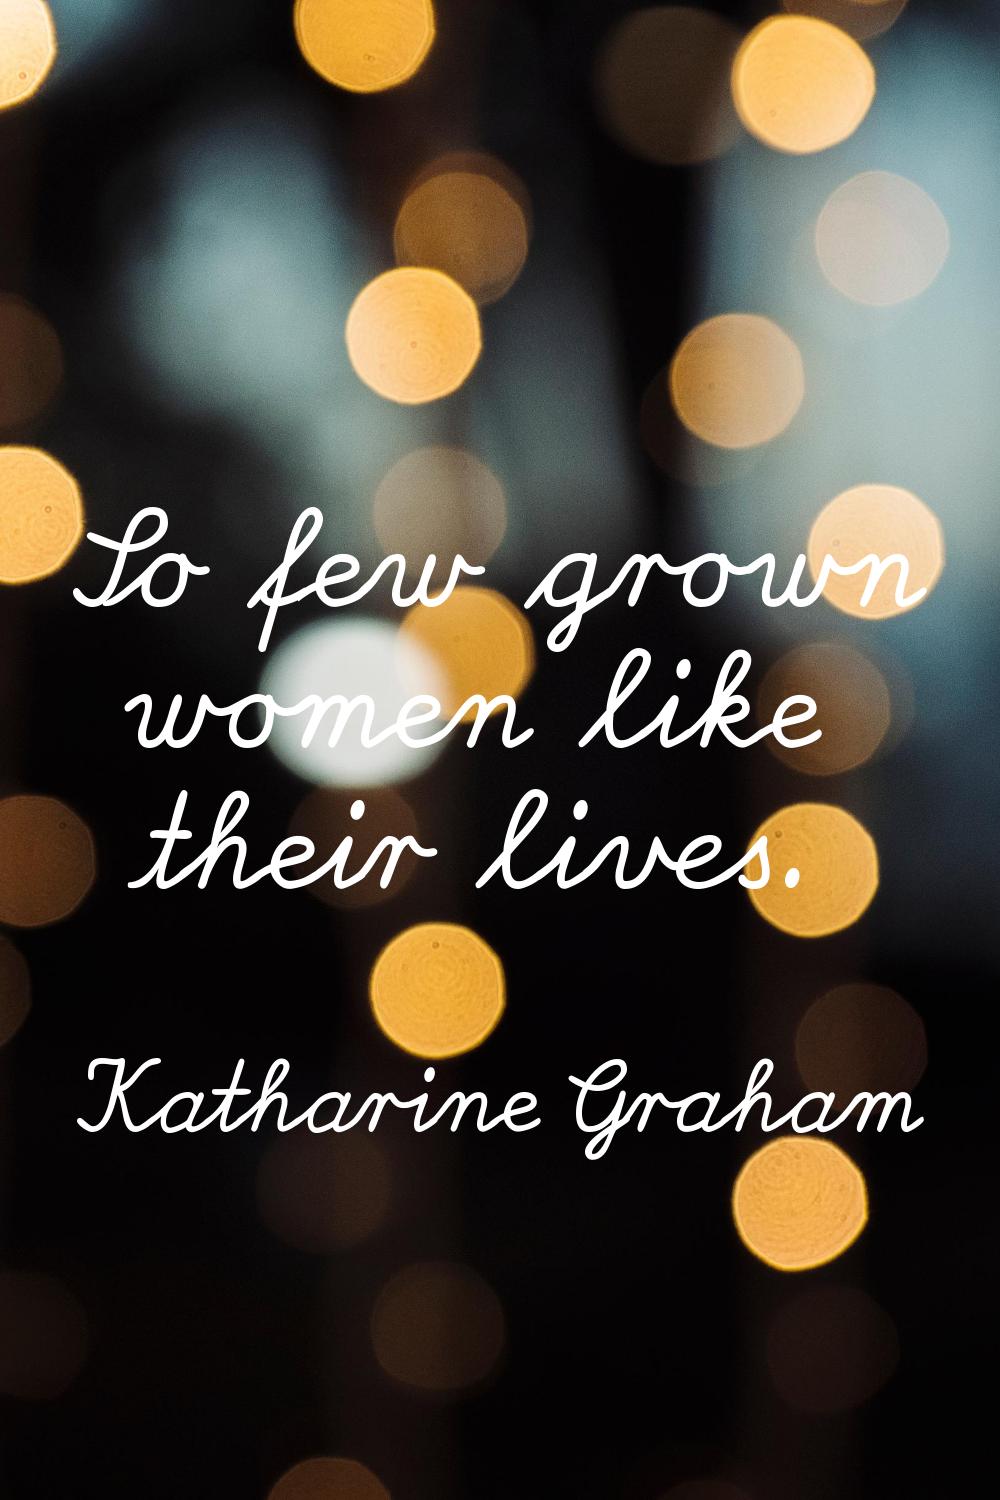 So few grown women like their lives.